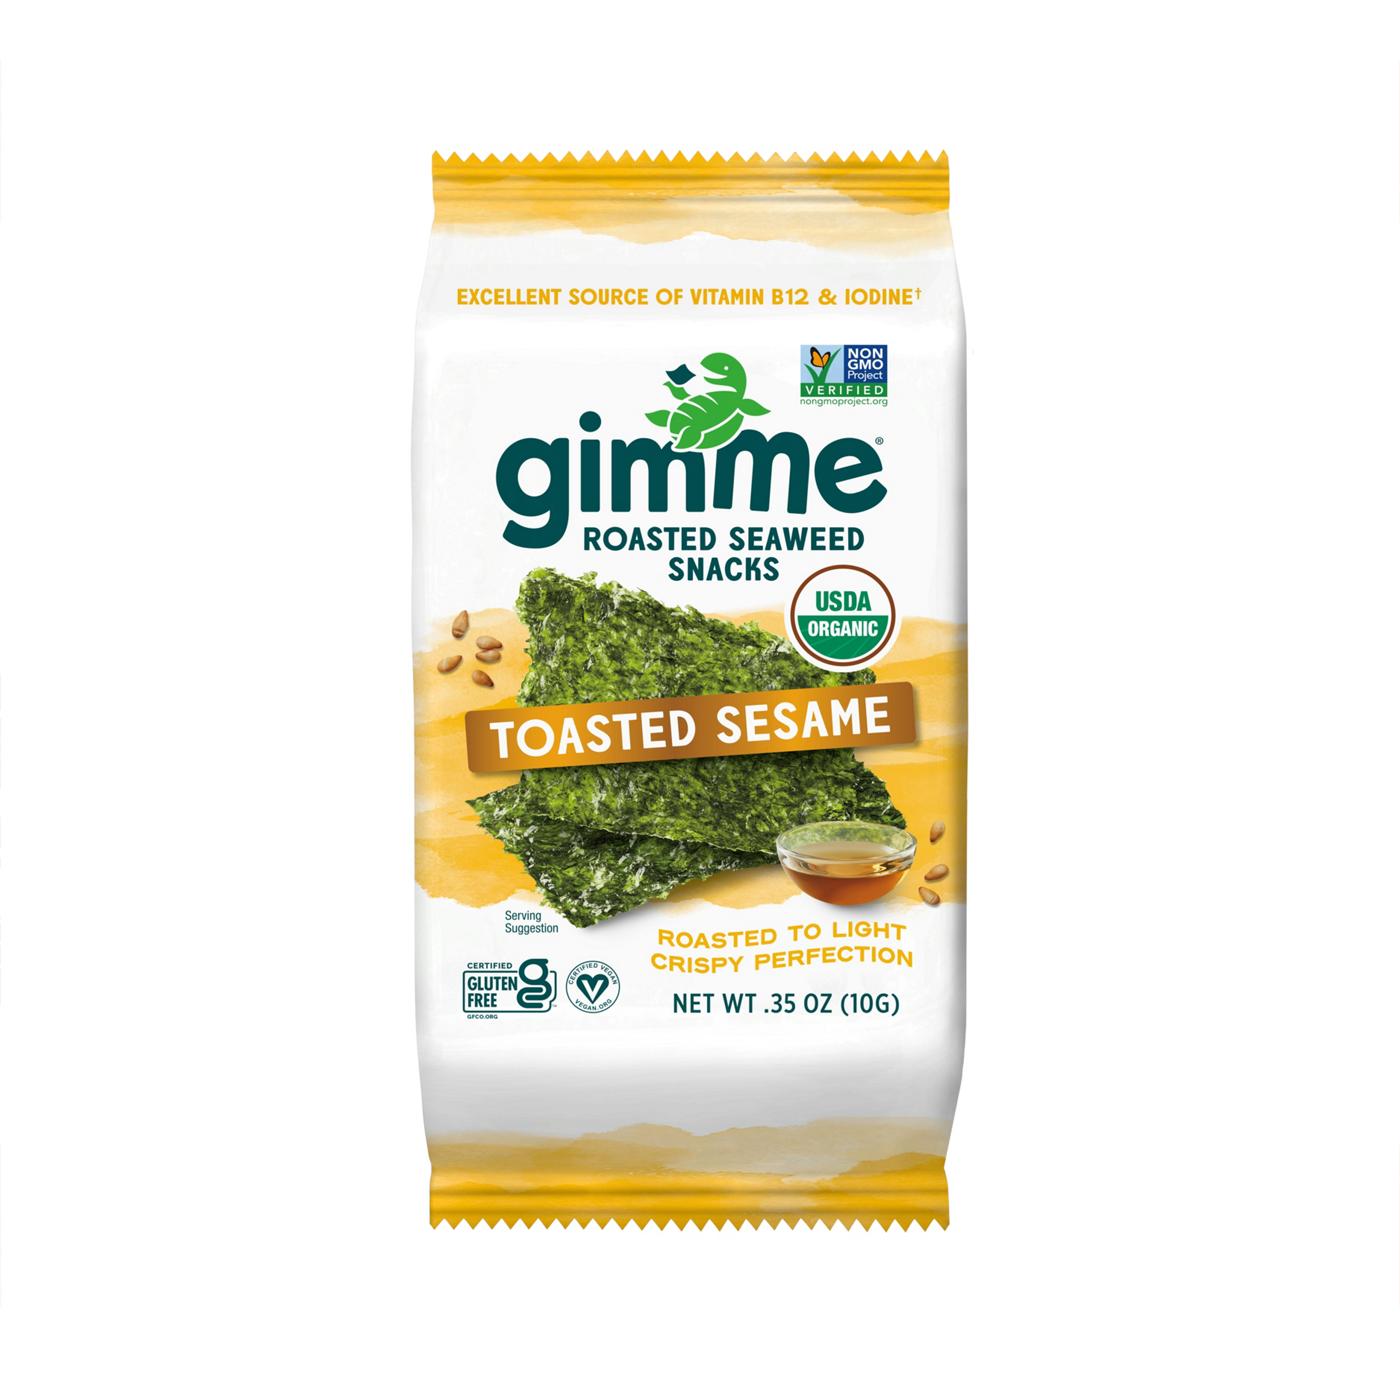 gimme Roasted Seaweed Snack - Toasted Sesame; image 1 of 8